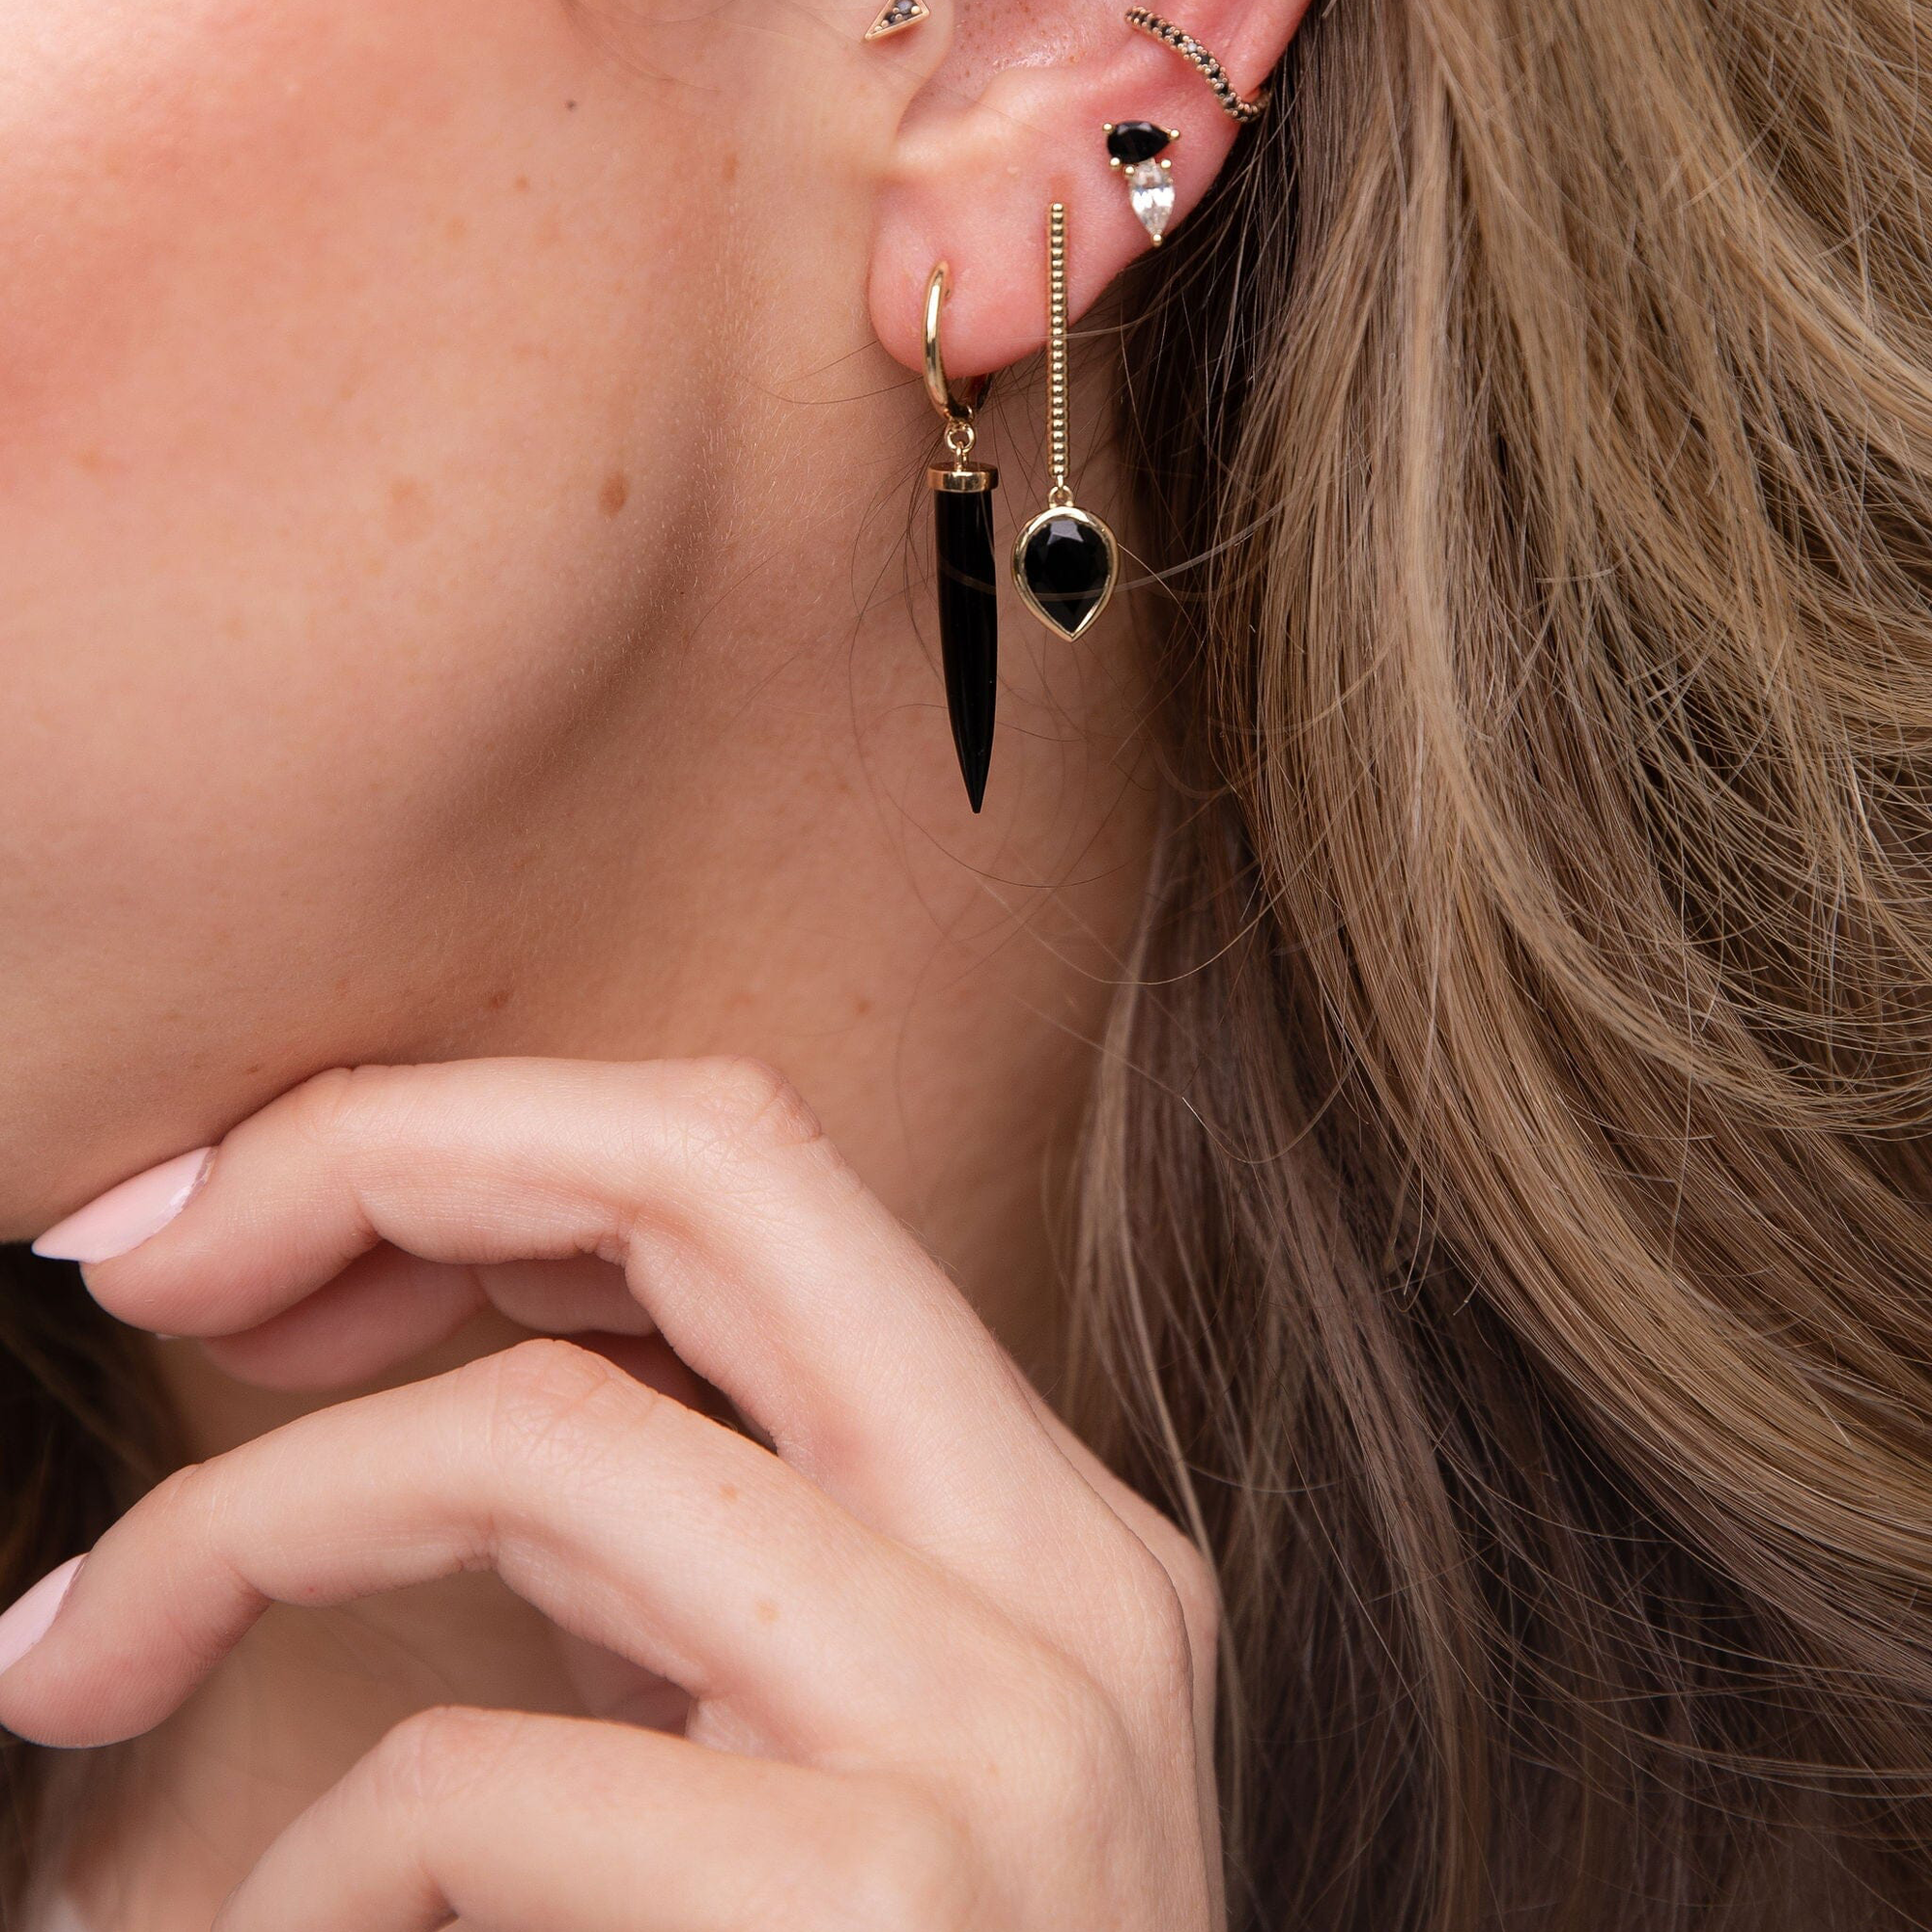 Pear Cut Jollie Gold Bar Earrings | Black